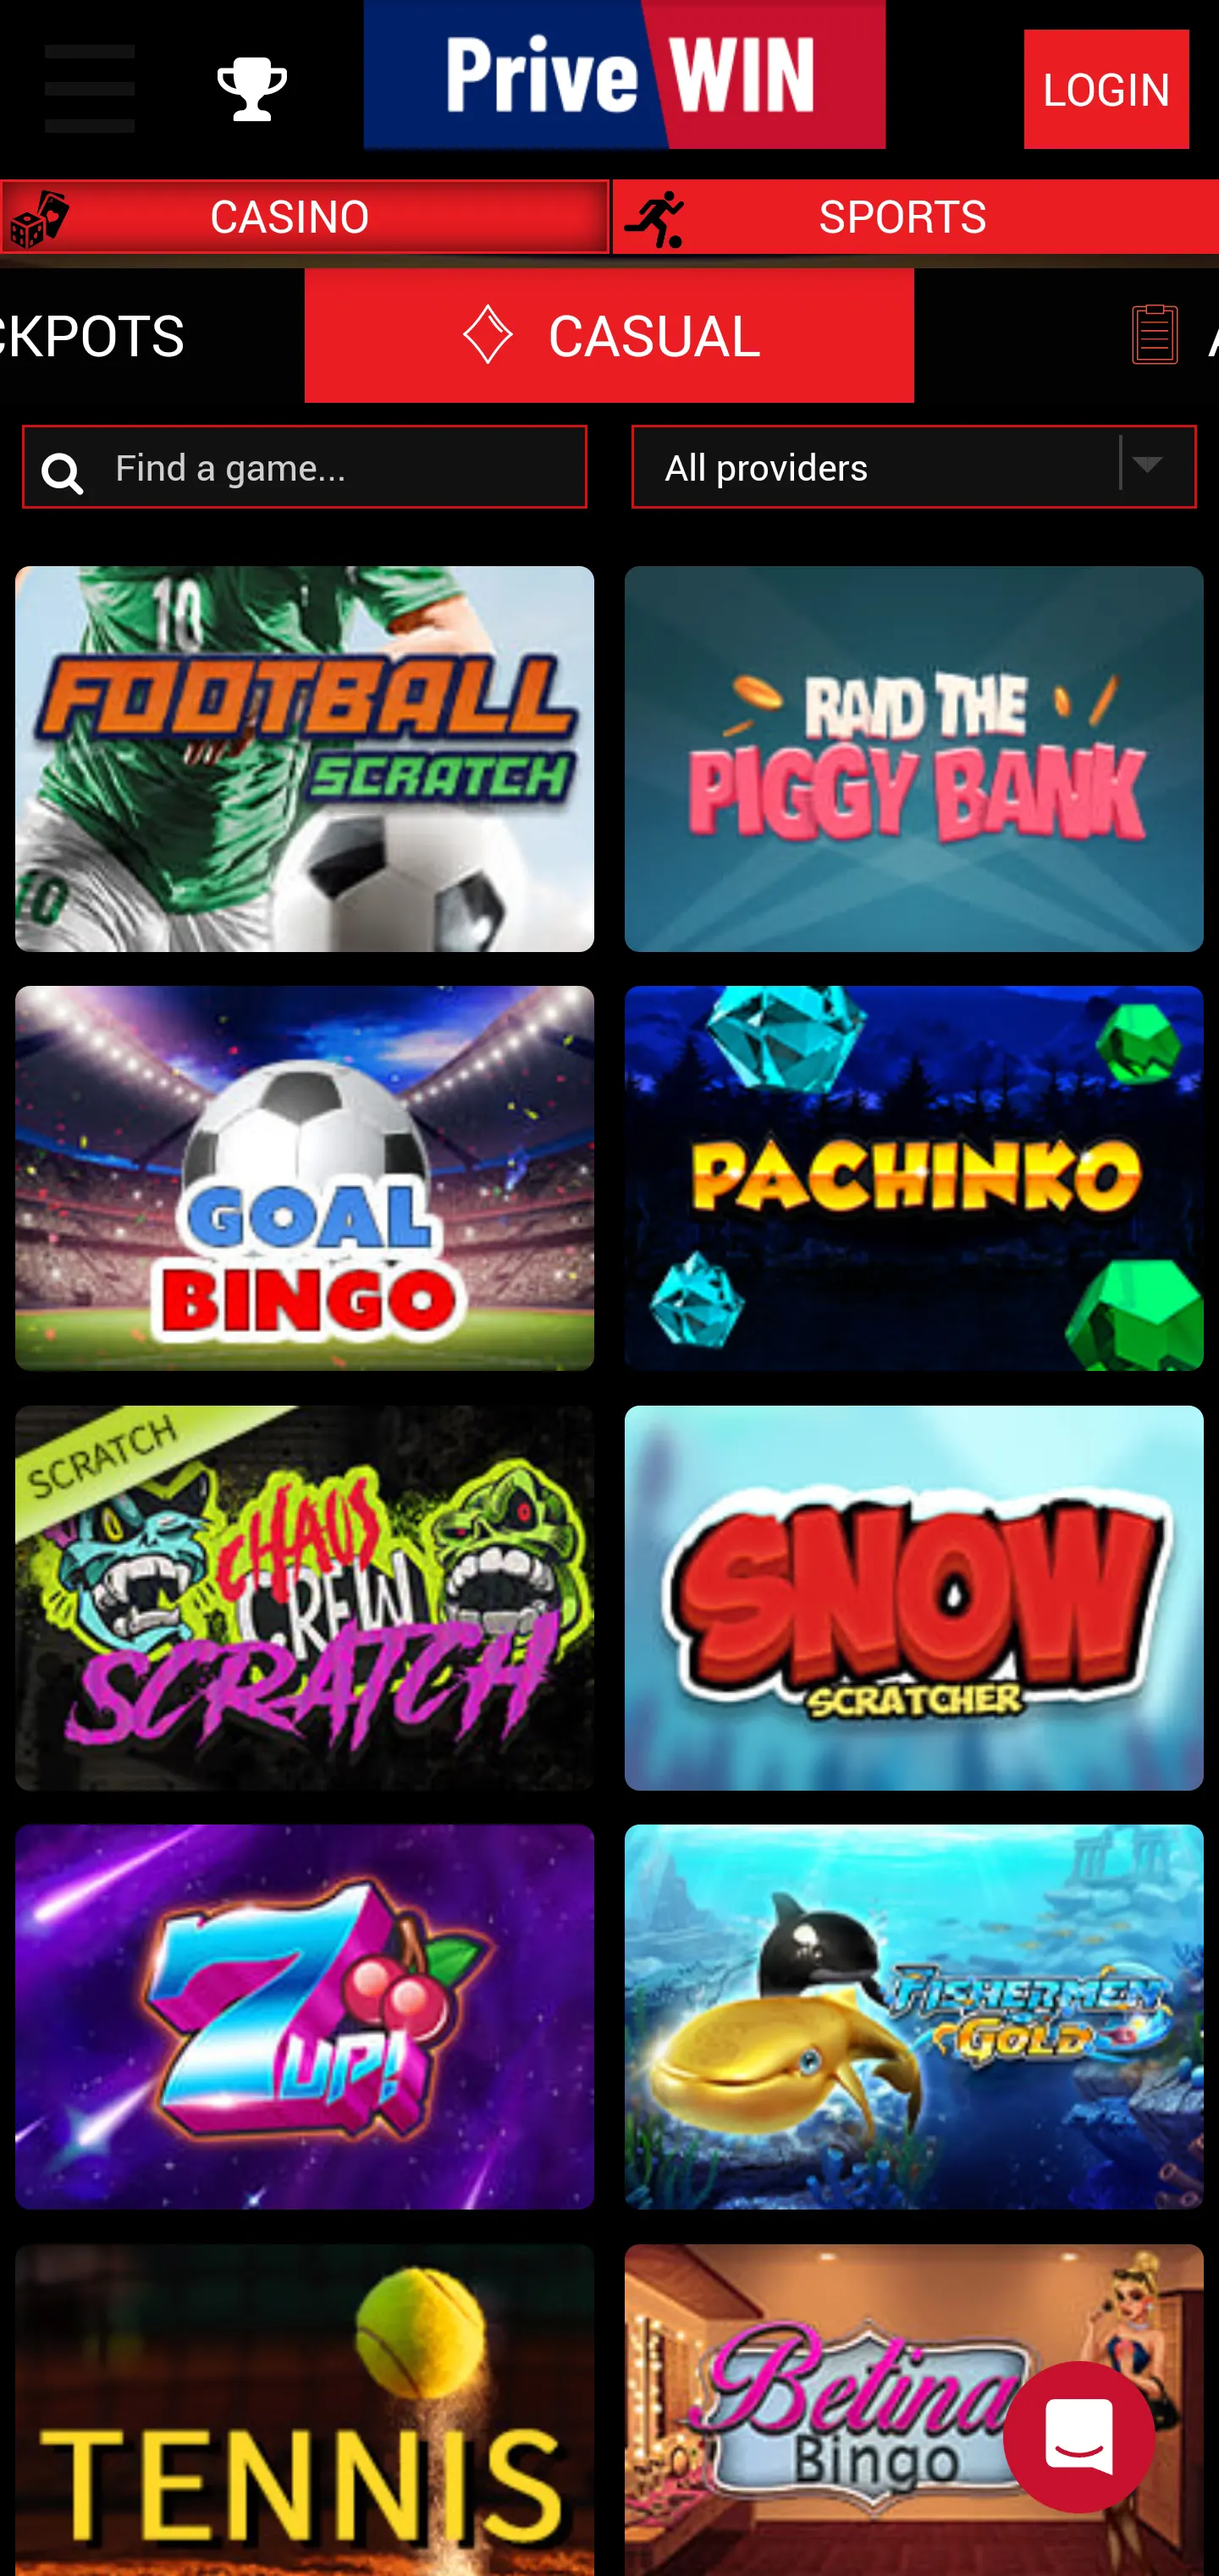 Privewin casino app screenshot 9